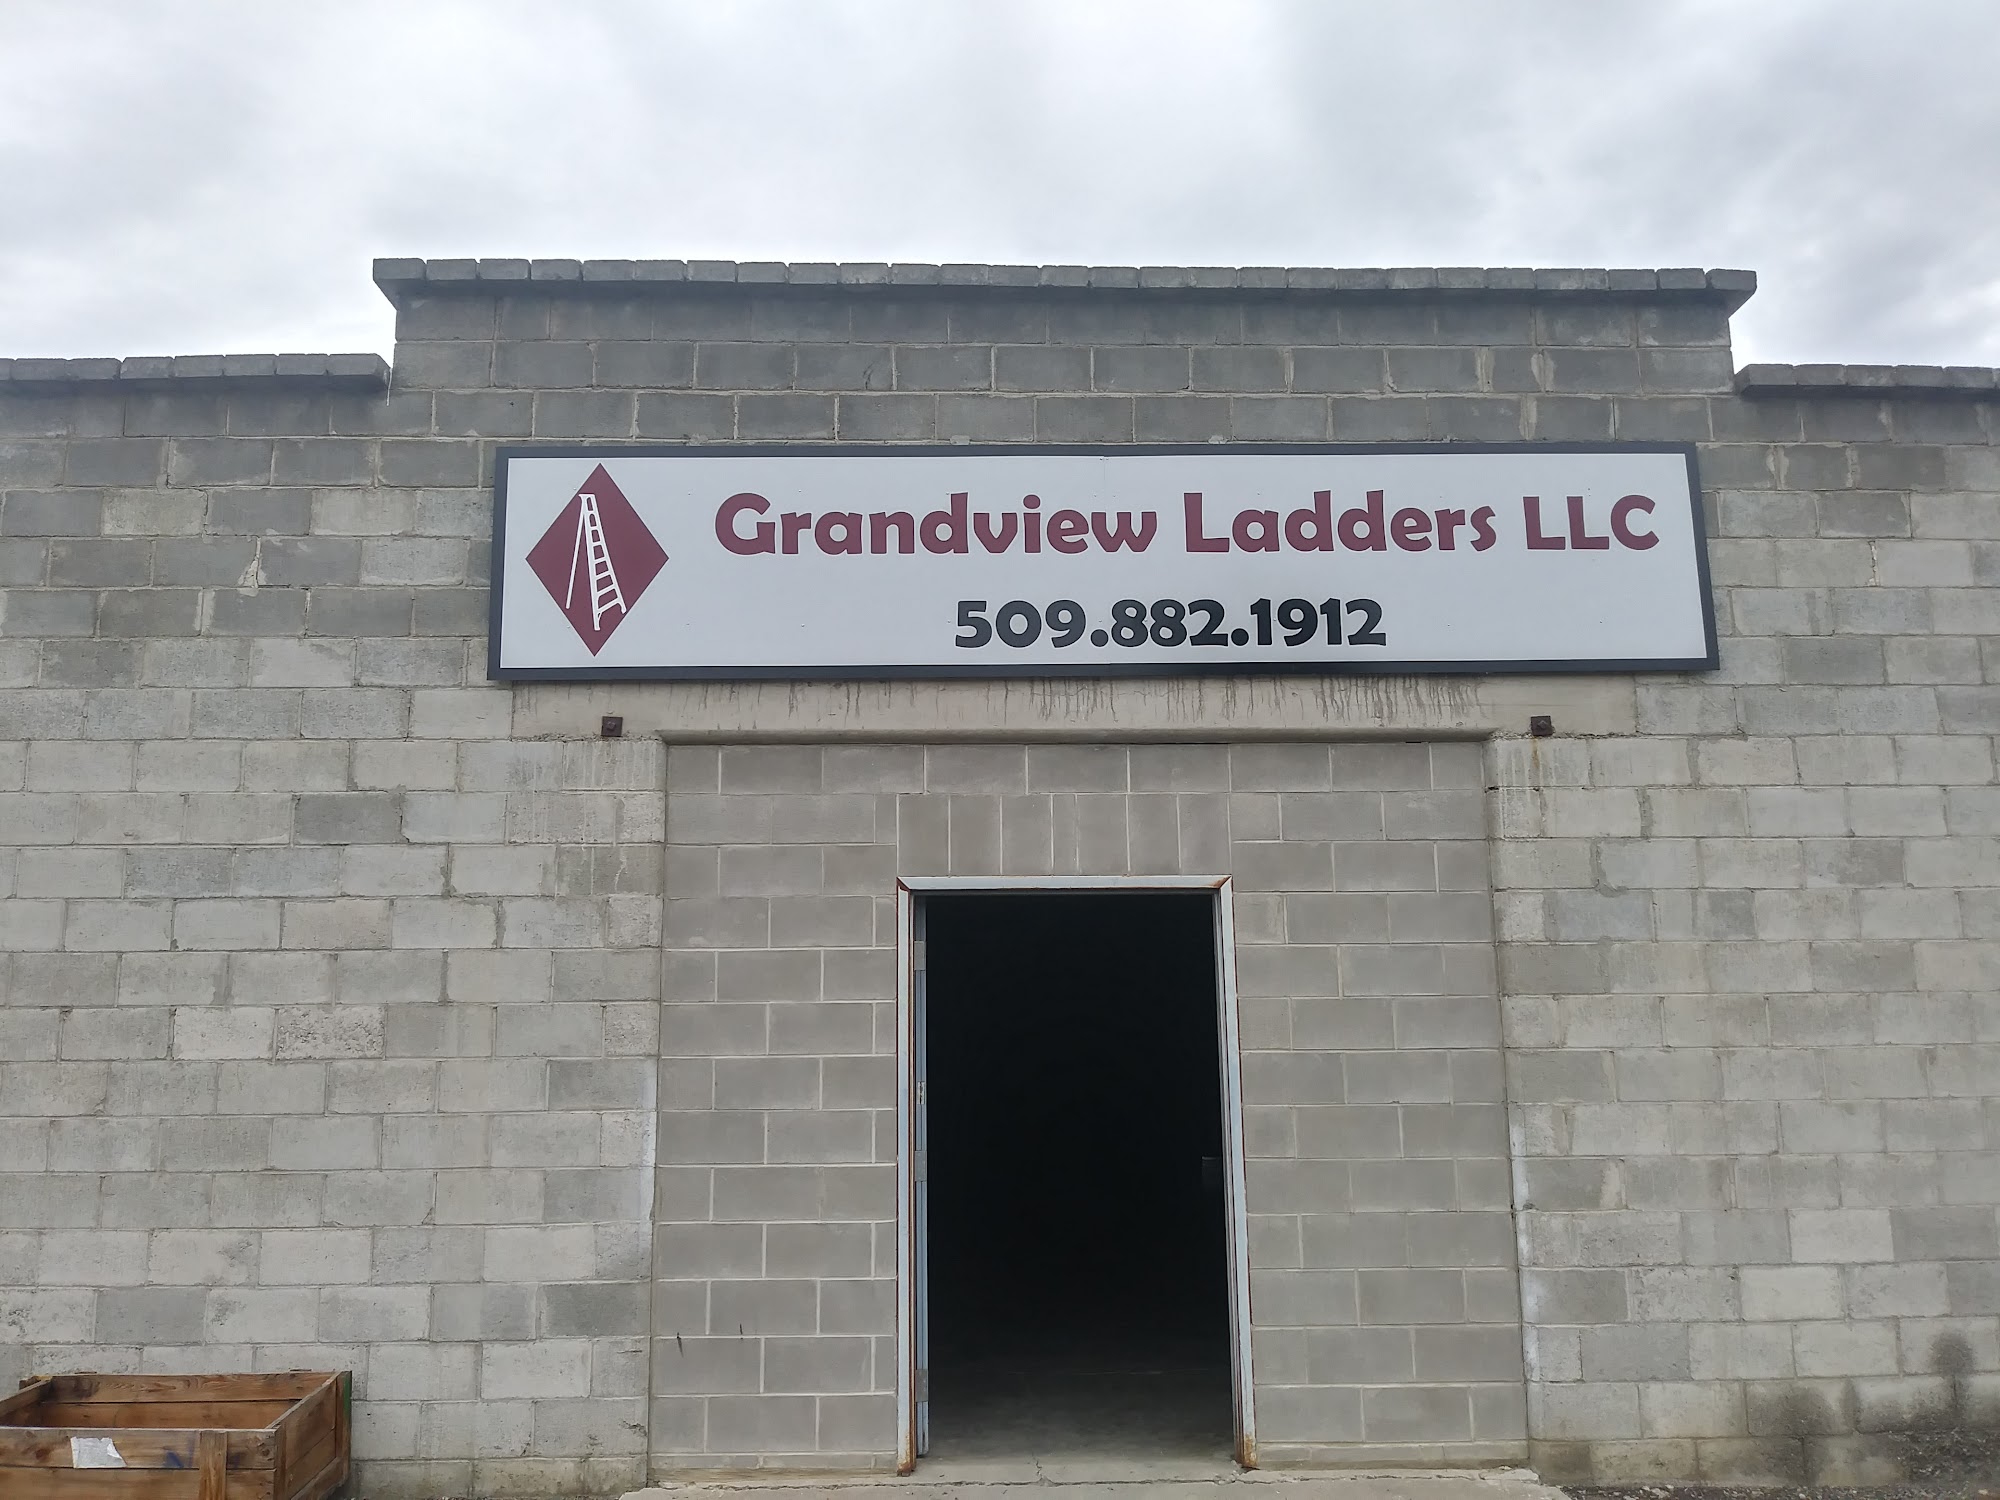 Grandview Ladders LLC